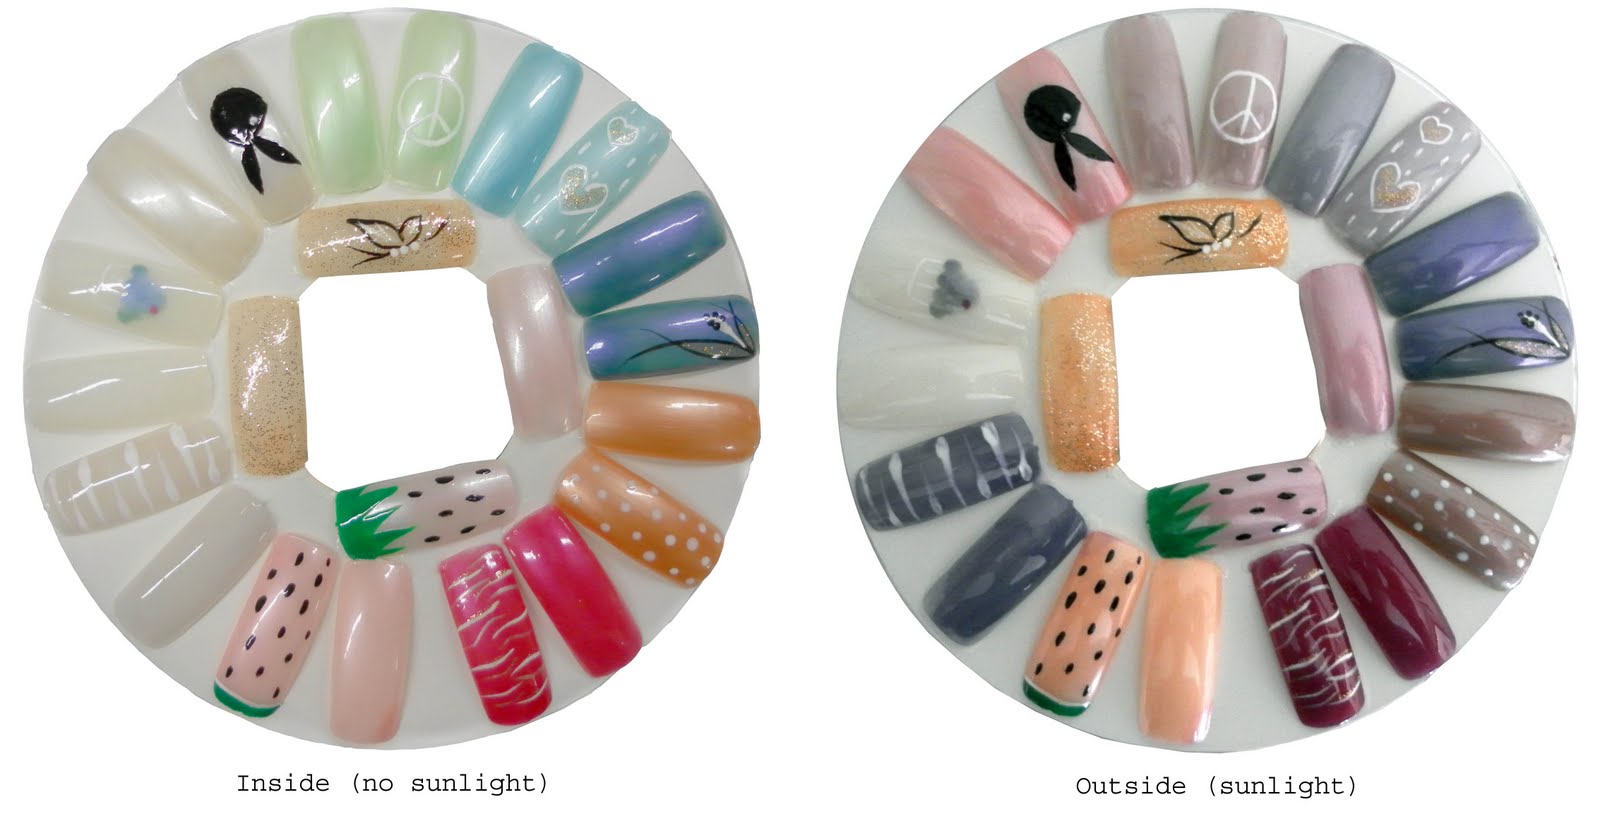 6. China Glaze Color Changing Nail Polish - wide 3